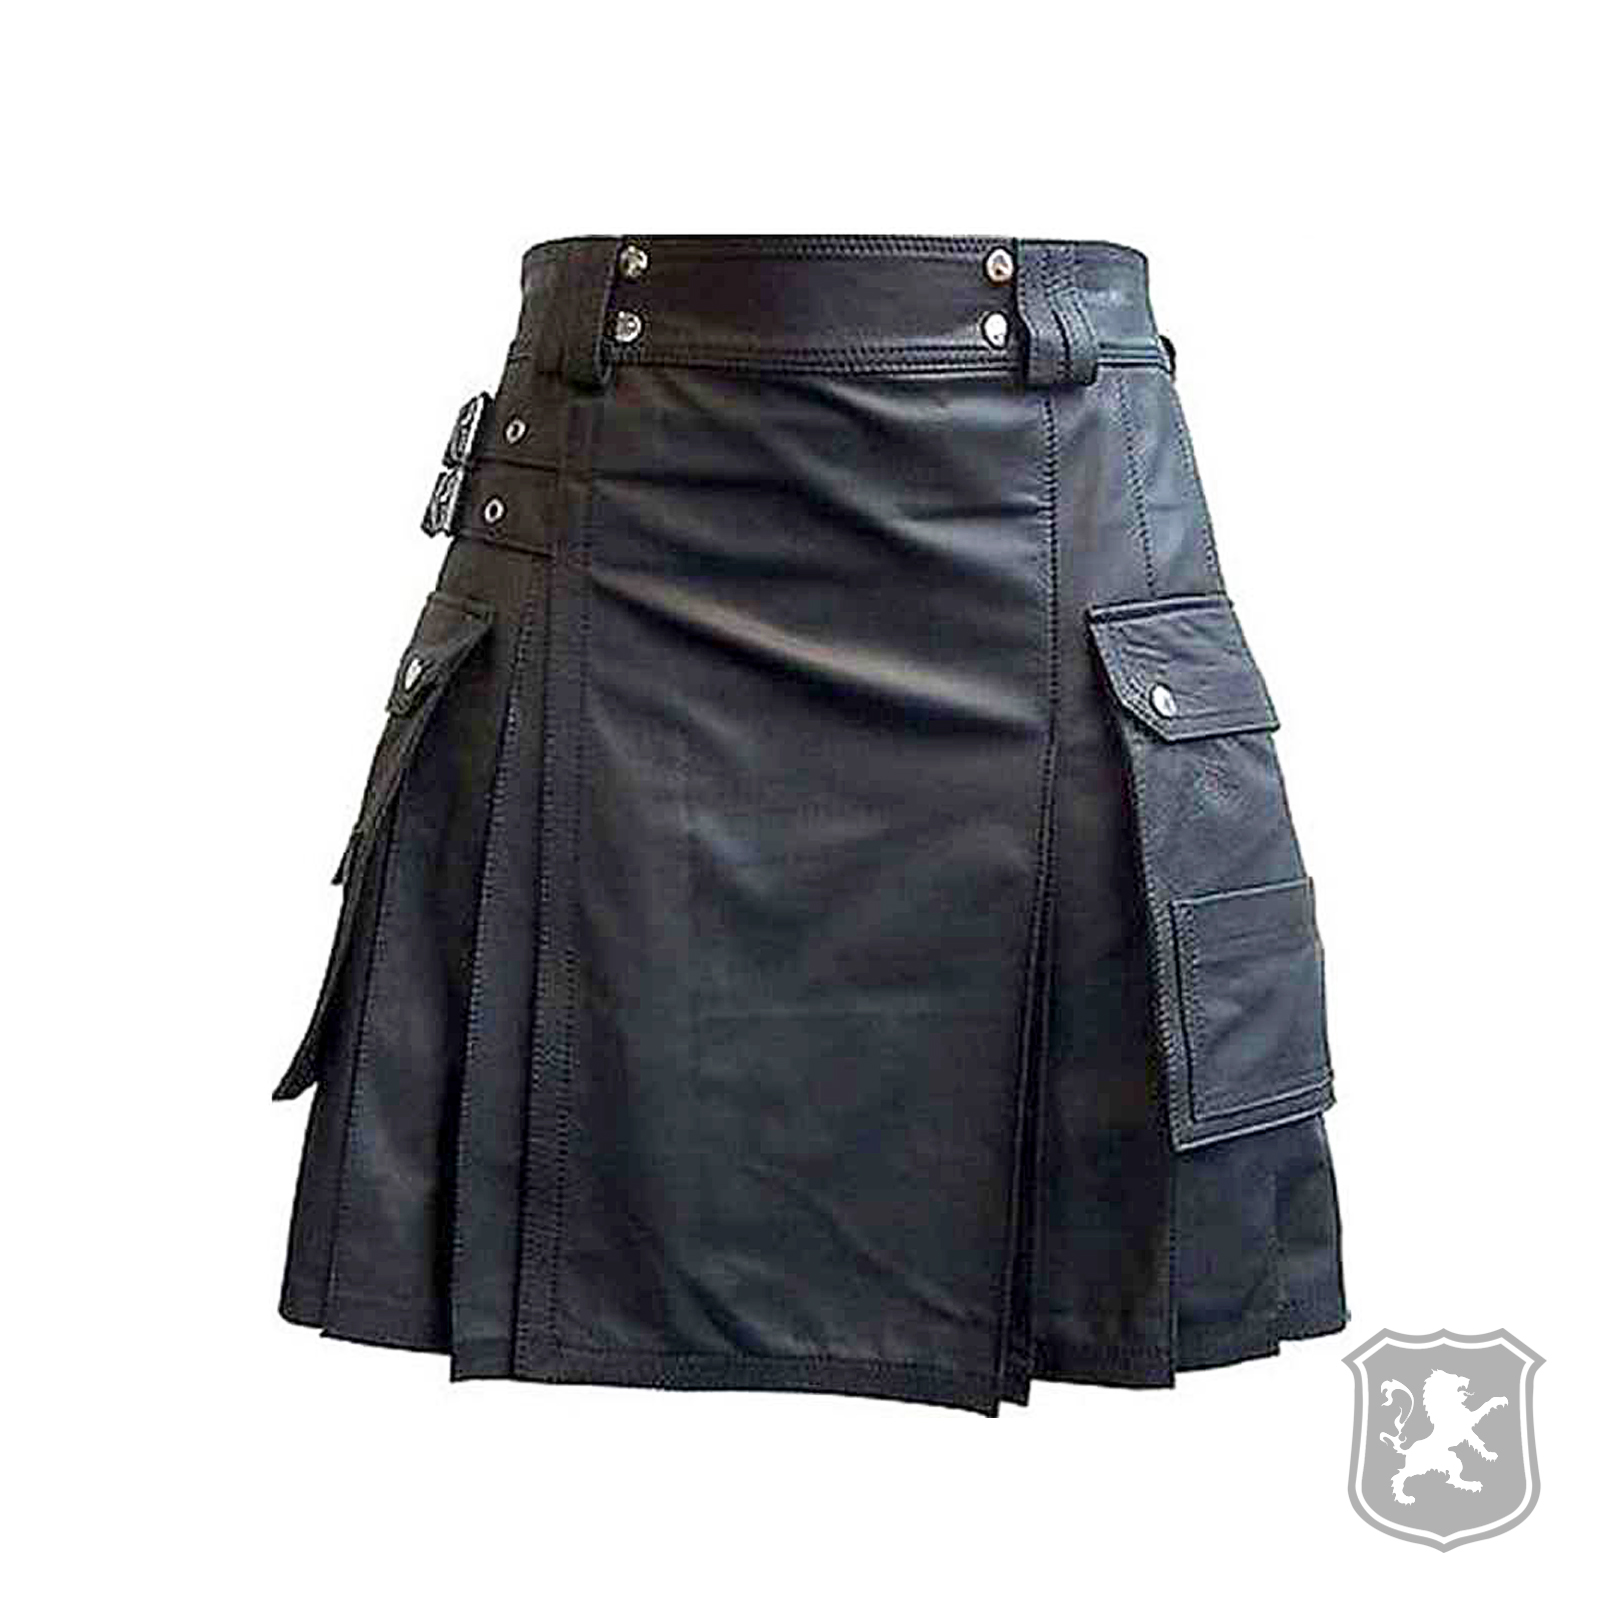 Black Leather Kilt With Cargo Pockets 